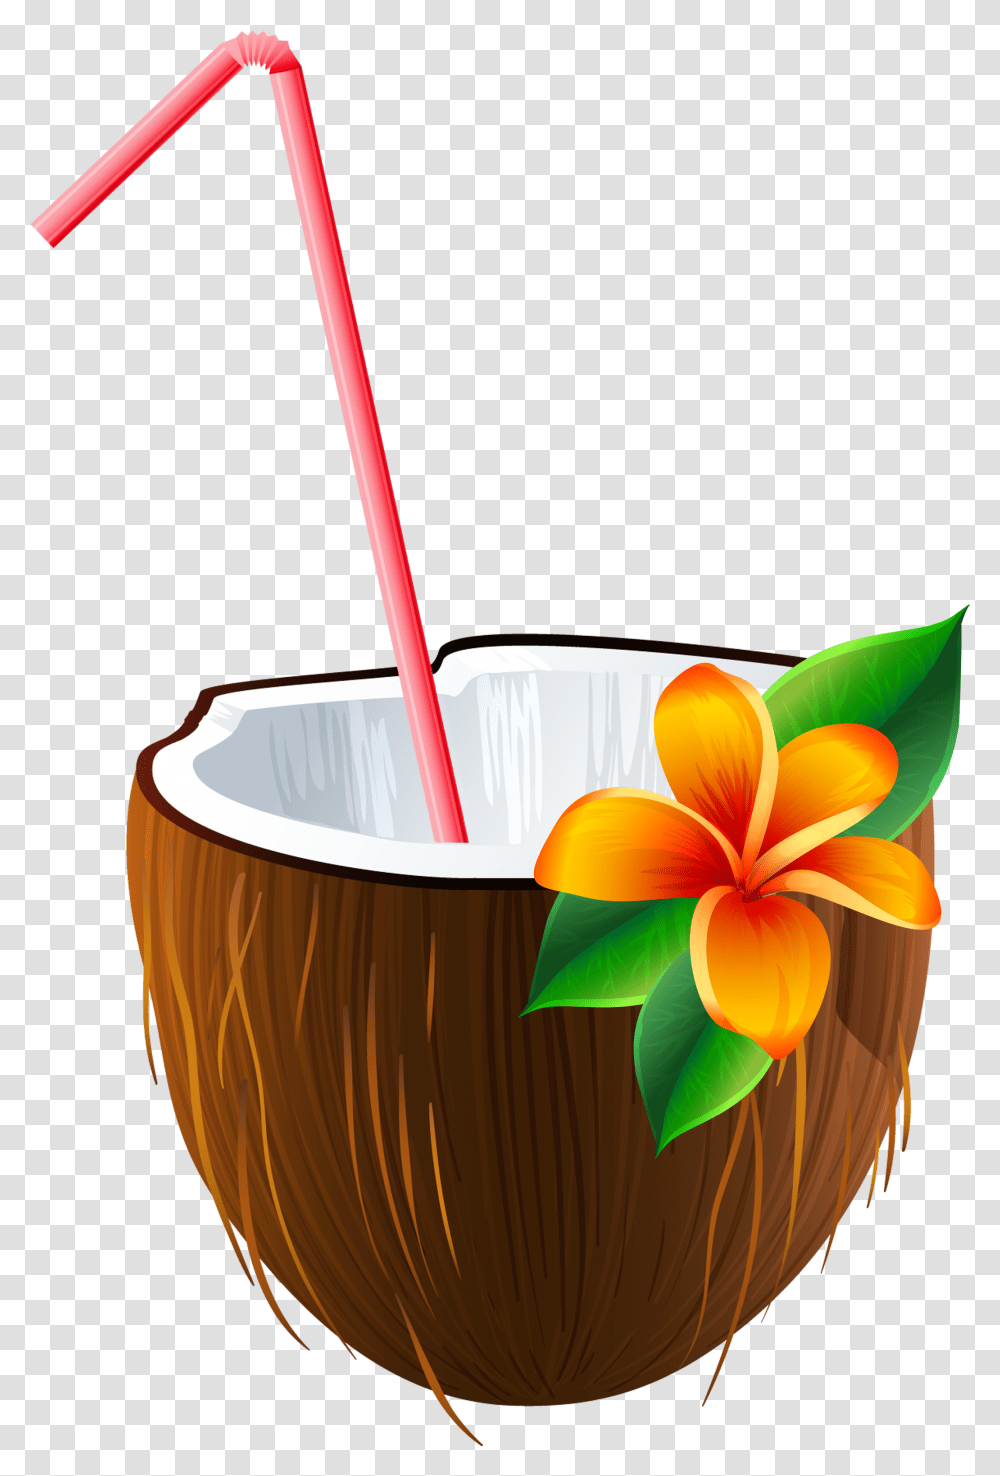 Exotic Coconut Cocktail Clipart Image Coconut Drink, Plant, Vegetable, Food, Fruit Transparent Png